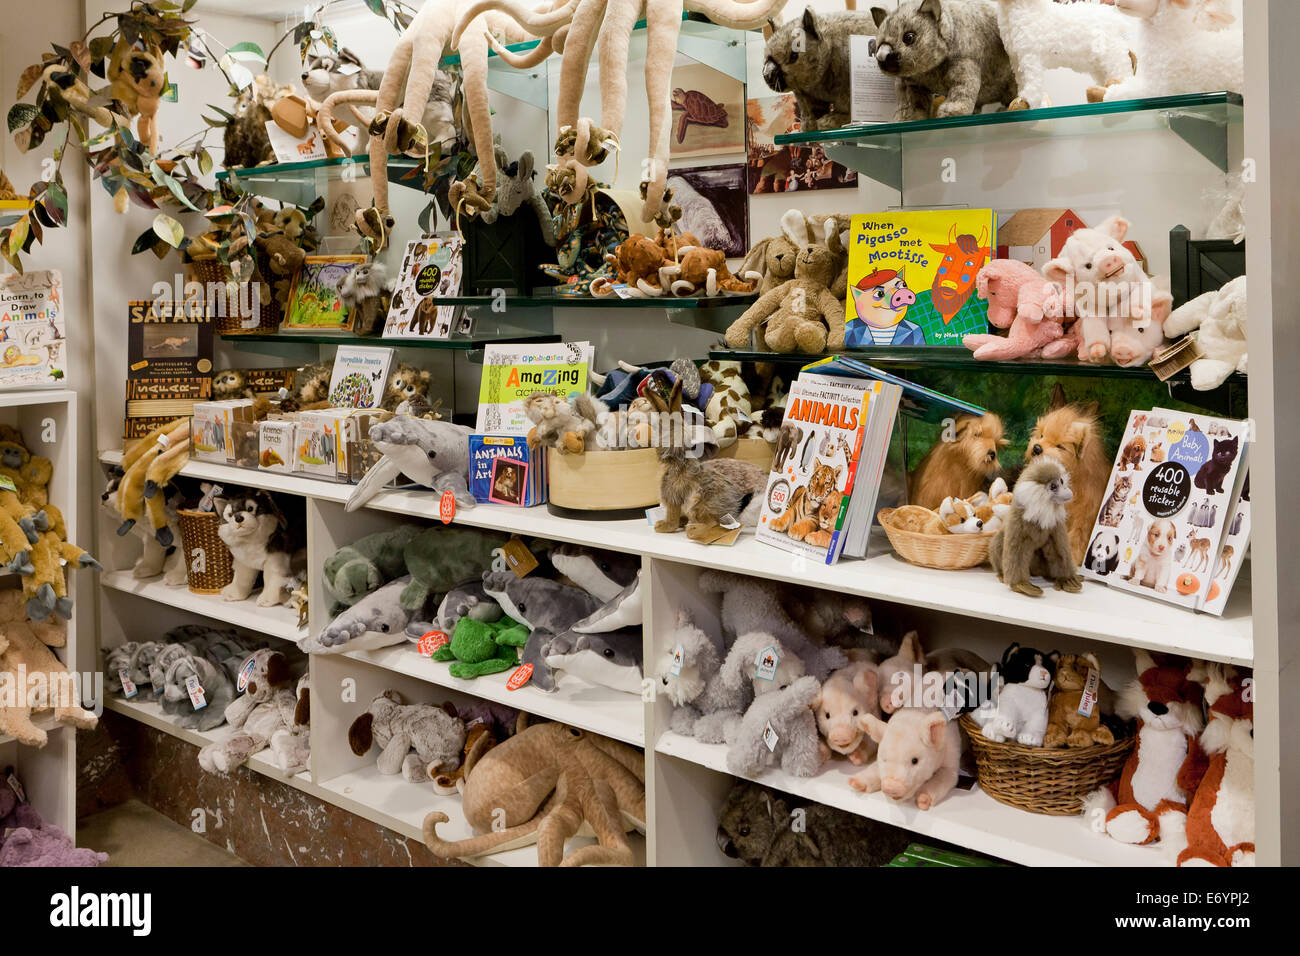 Stuffed animal store -Fotos und -Bildmaterial in hoher Auflösung – Alamy